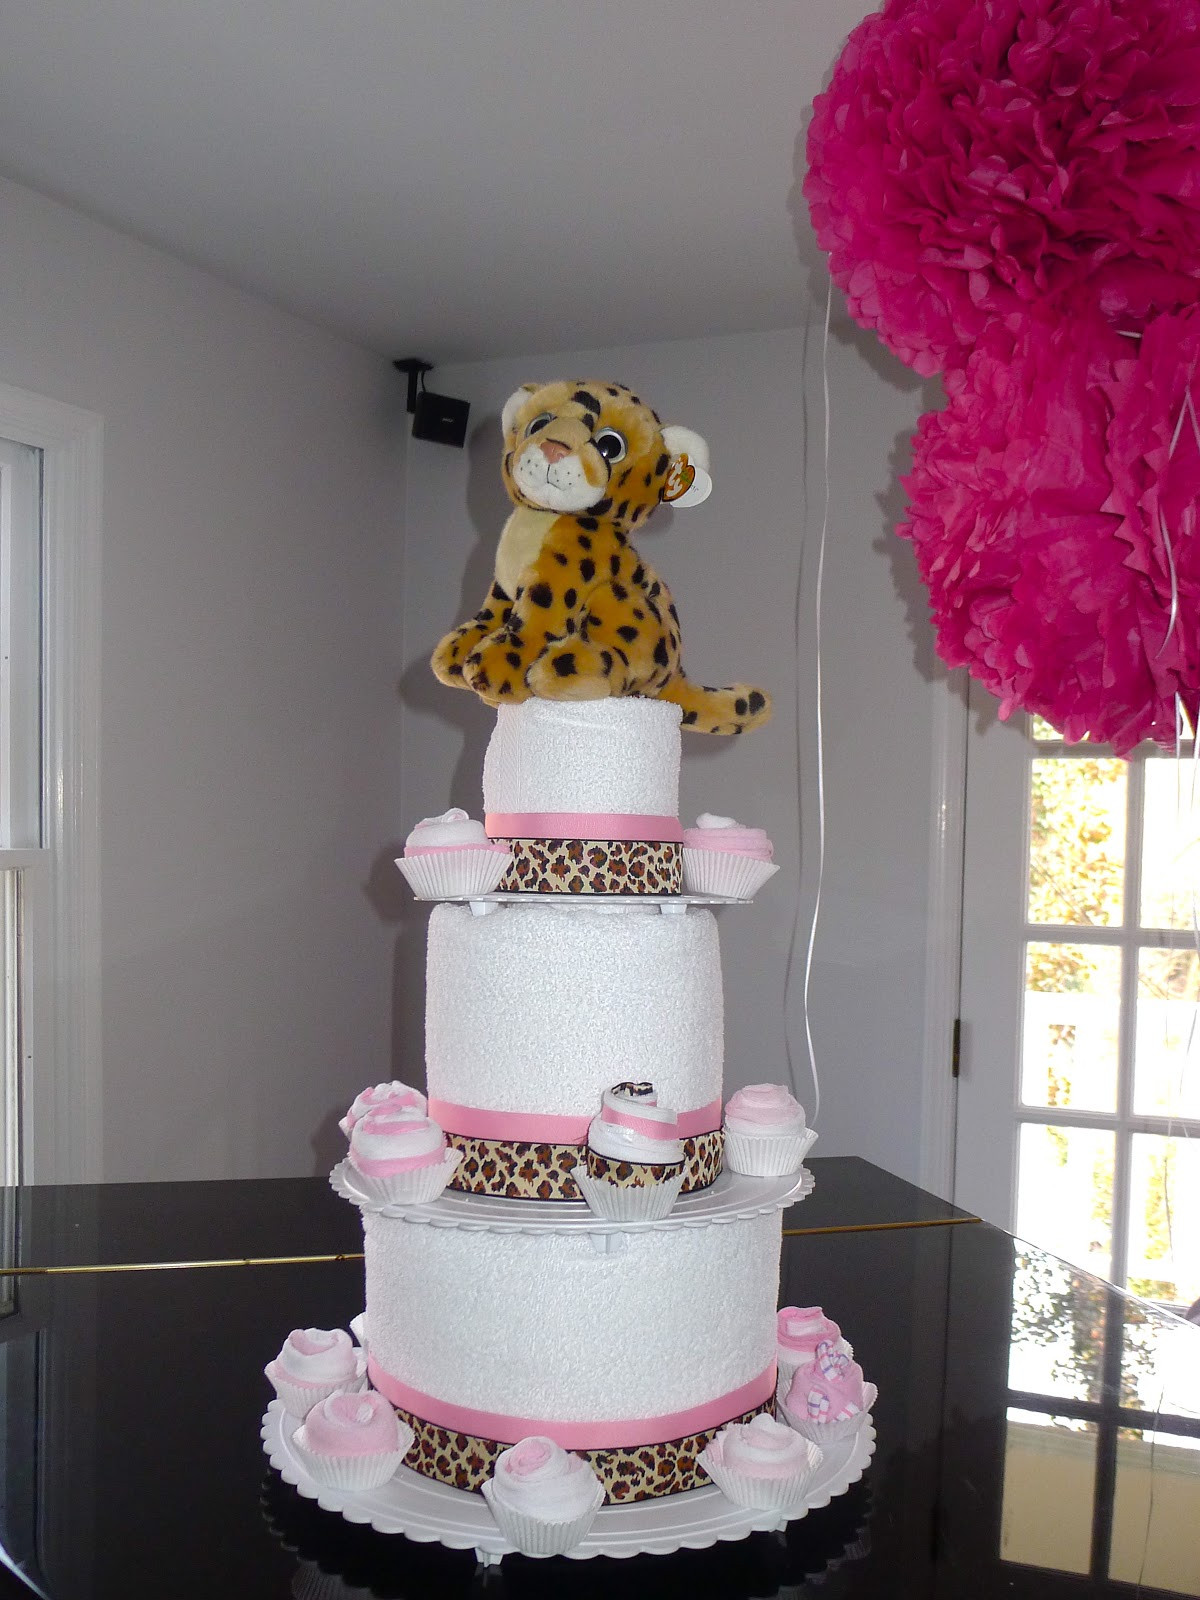 DIY Baby Shower Cakes
 Fashionably Festive Pink Baby Shower DIY Towel Cake